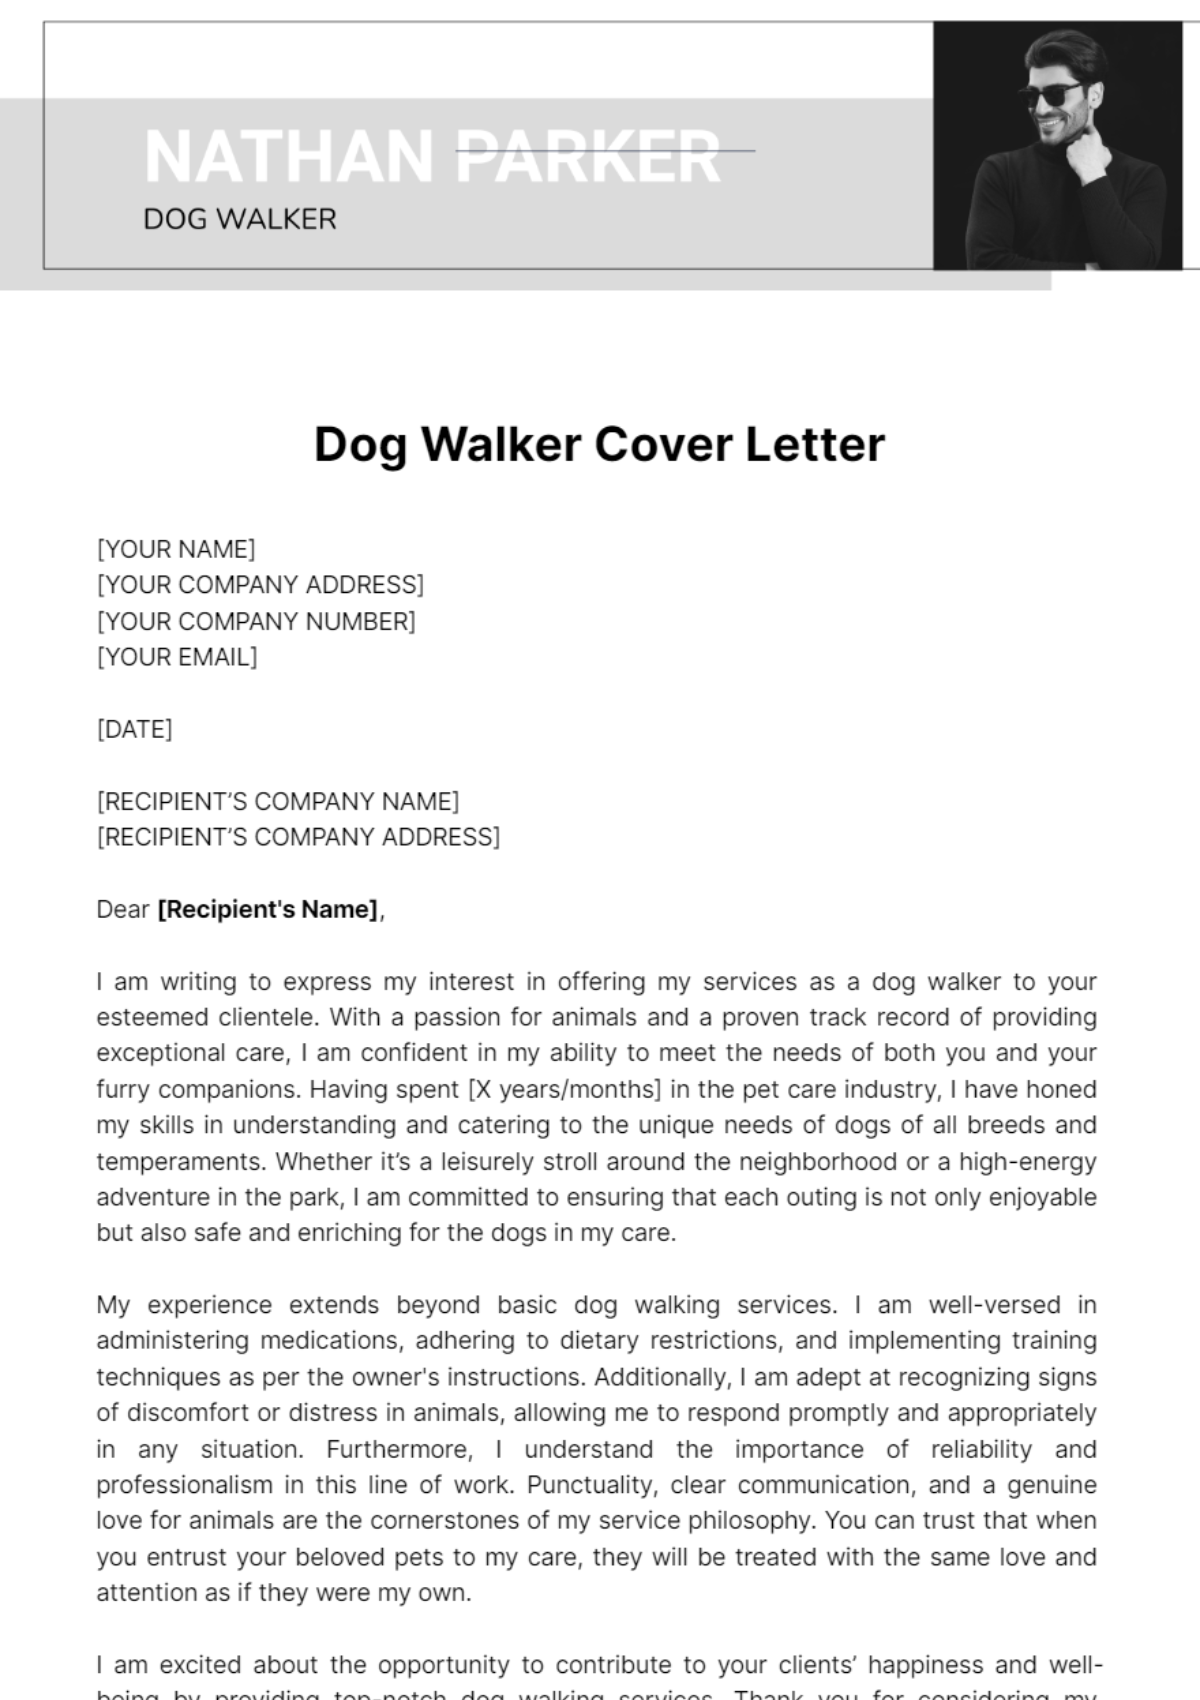 Dog Walker Cover Letter Template